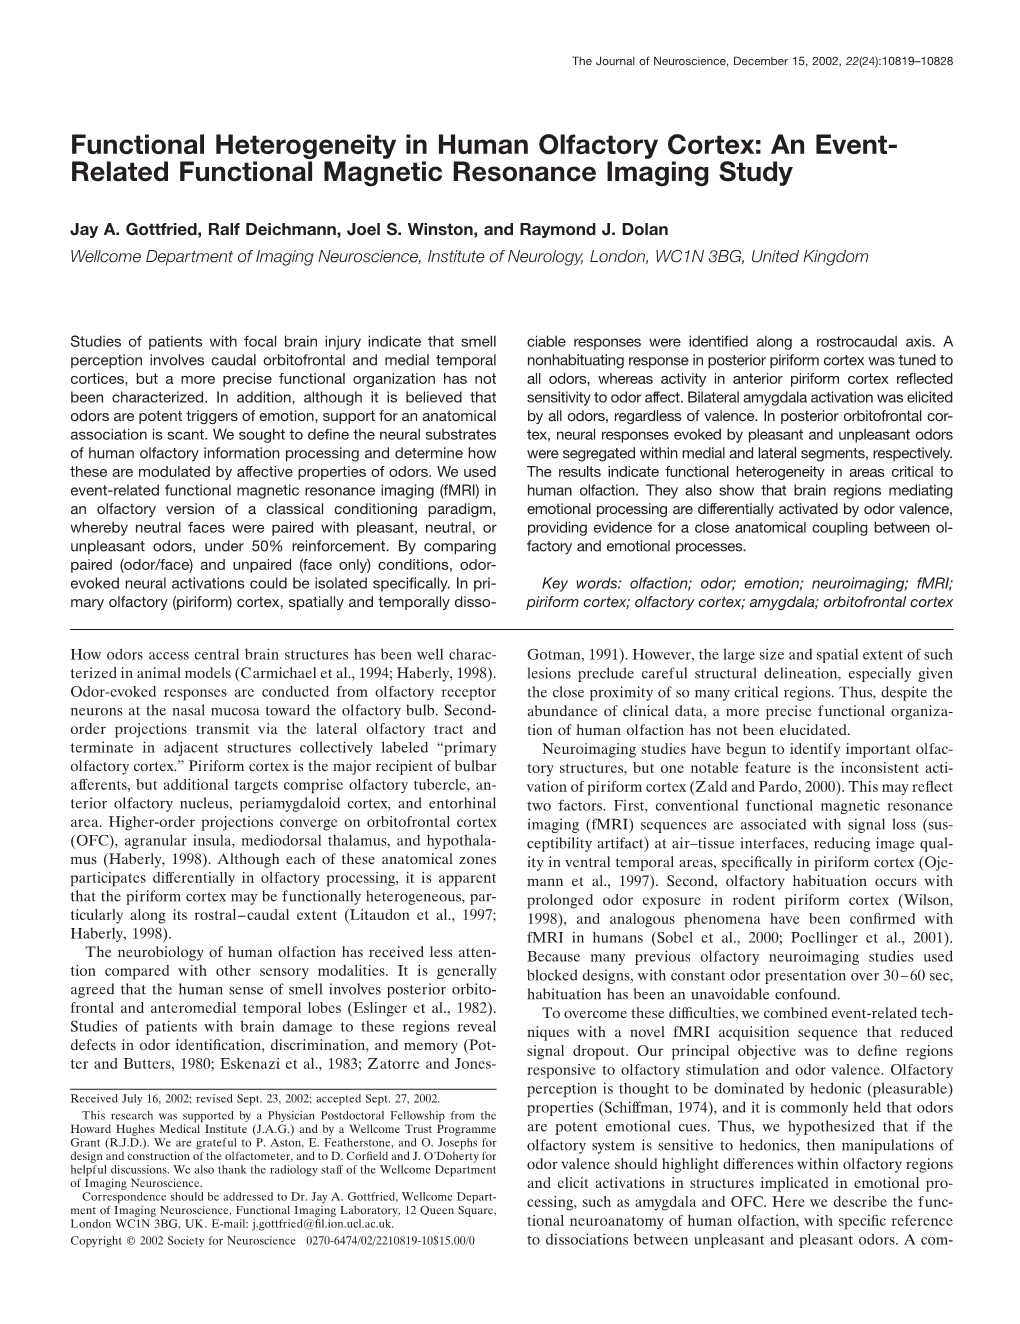 Functional Heterogeneity in Human Olfactory Cortex: an Event- Related Functional Magnetic Resonance Imaging Study